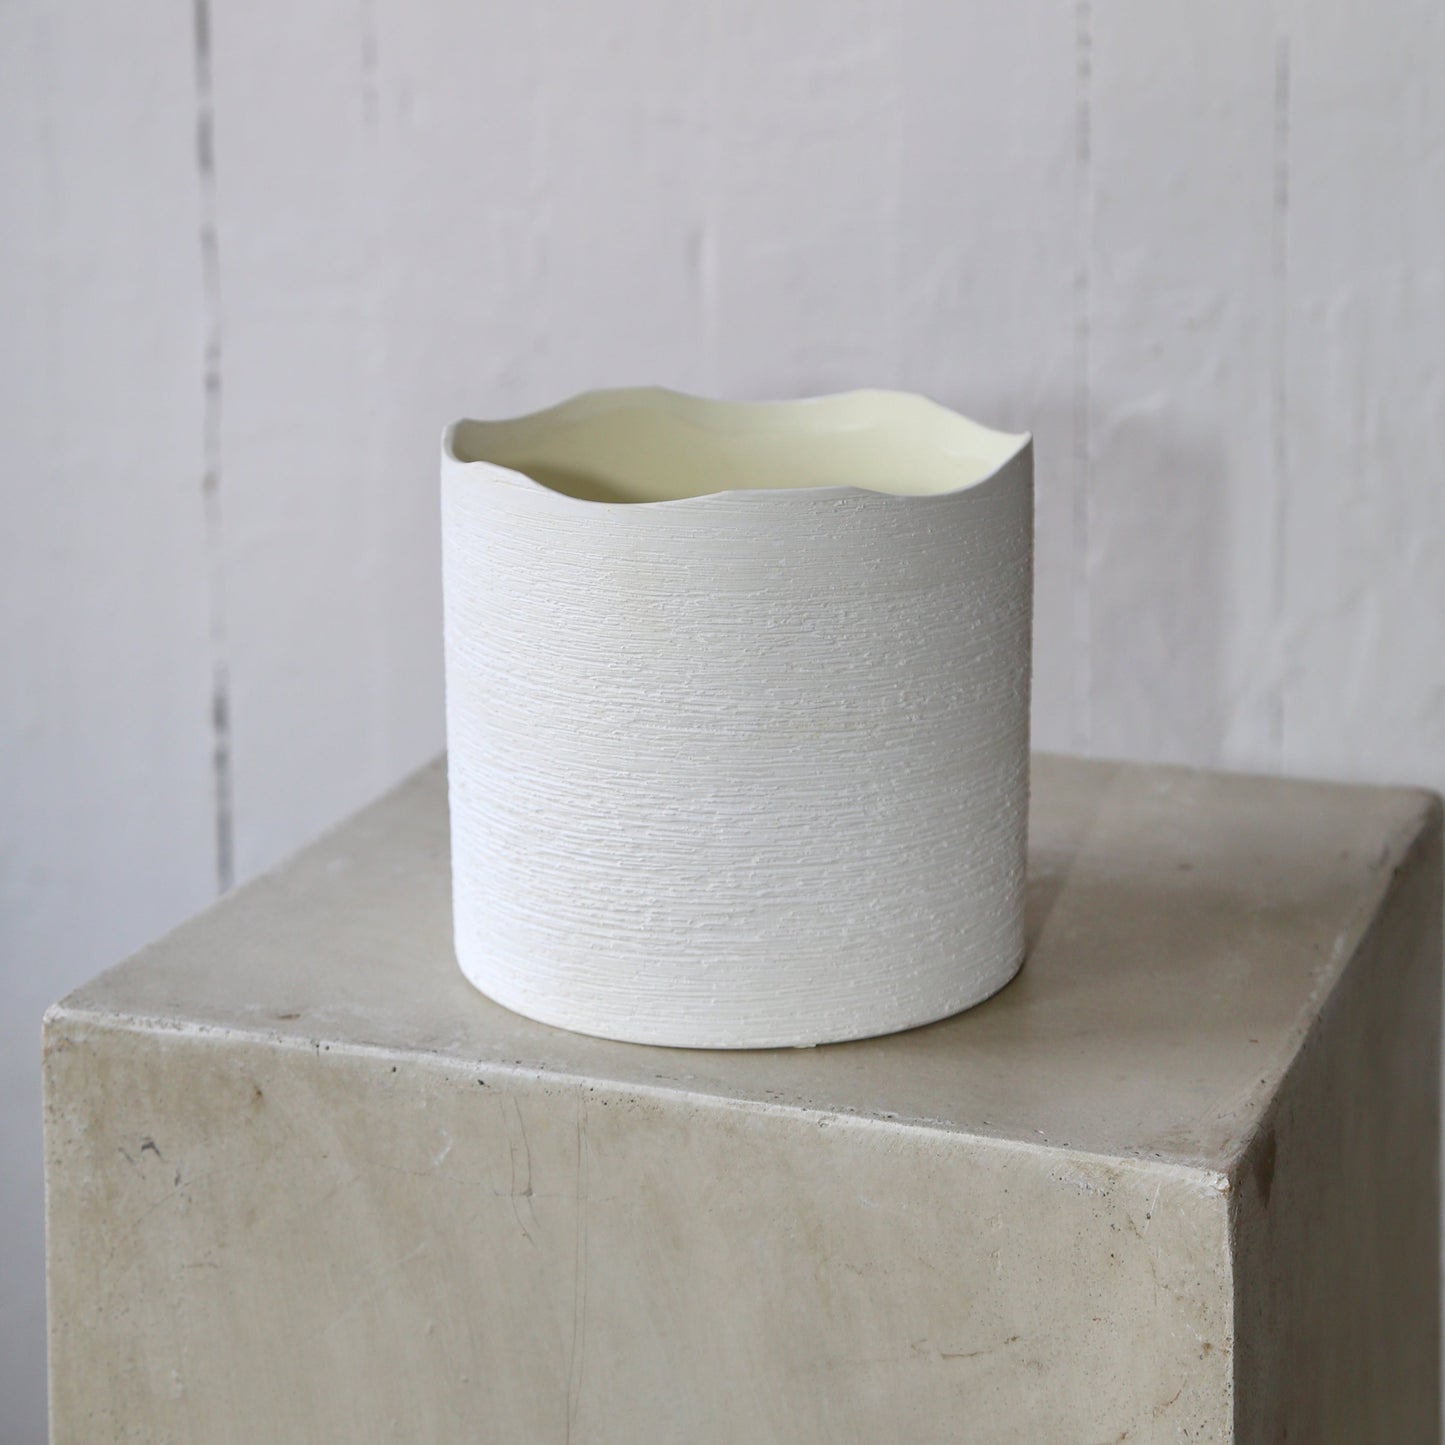 6" Delphi Ceramic Pot available at Rook & Rose.